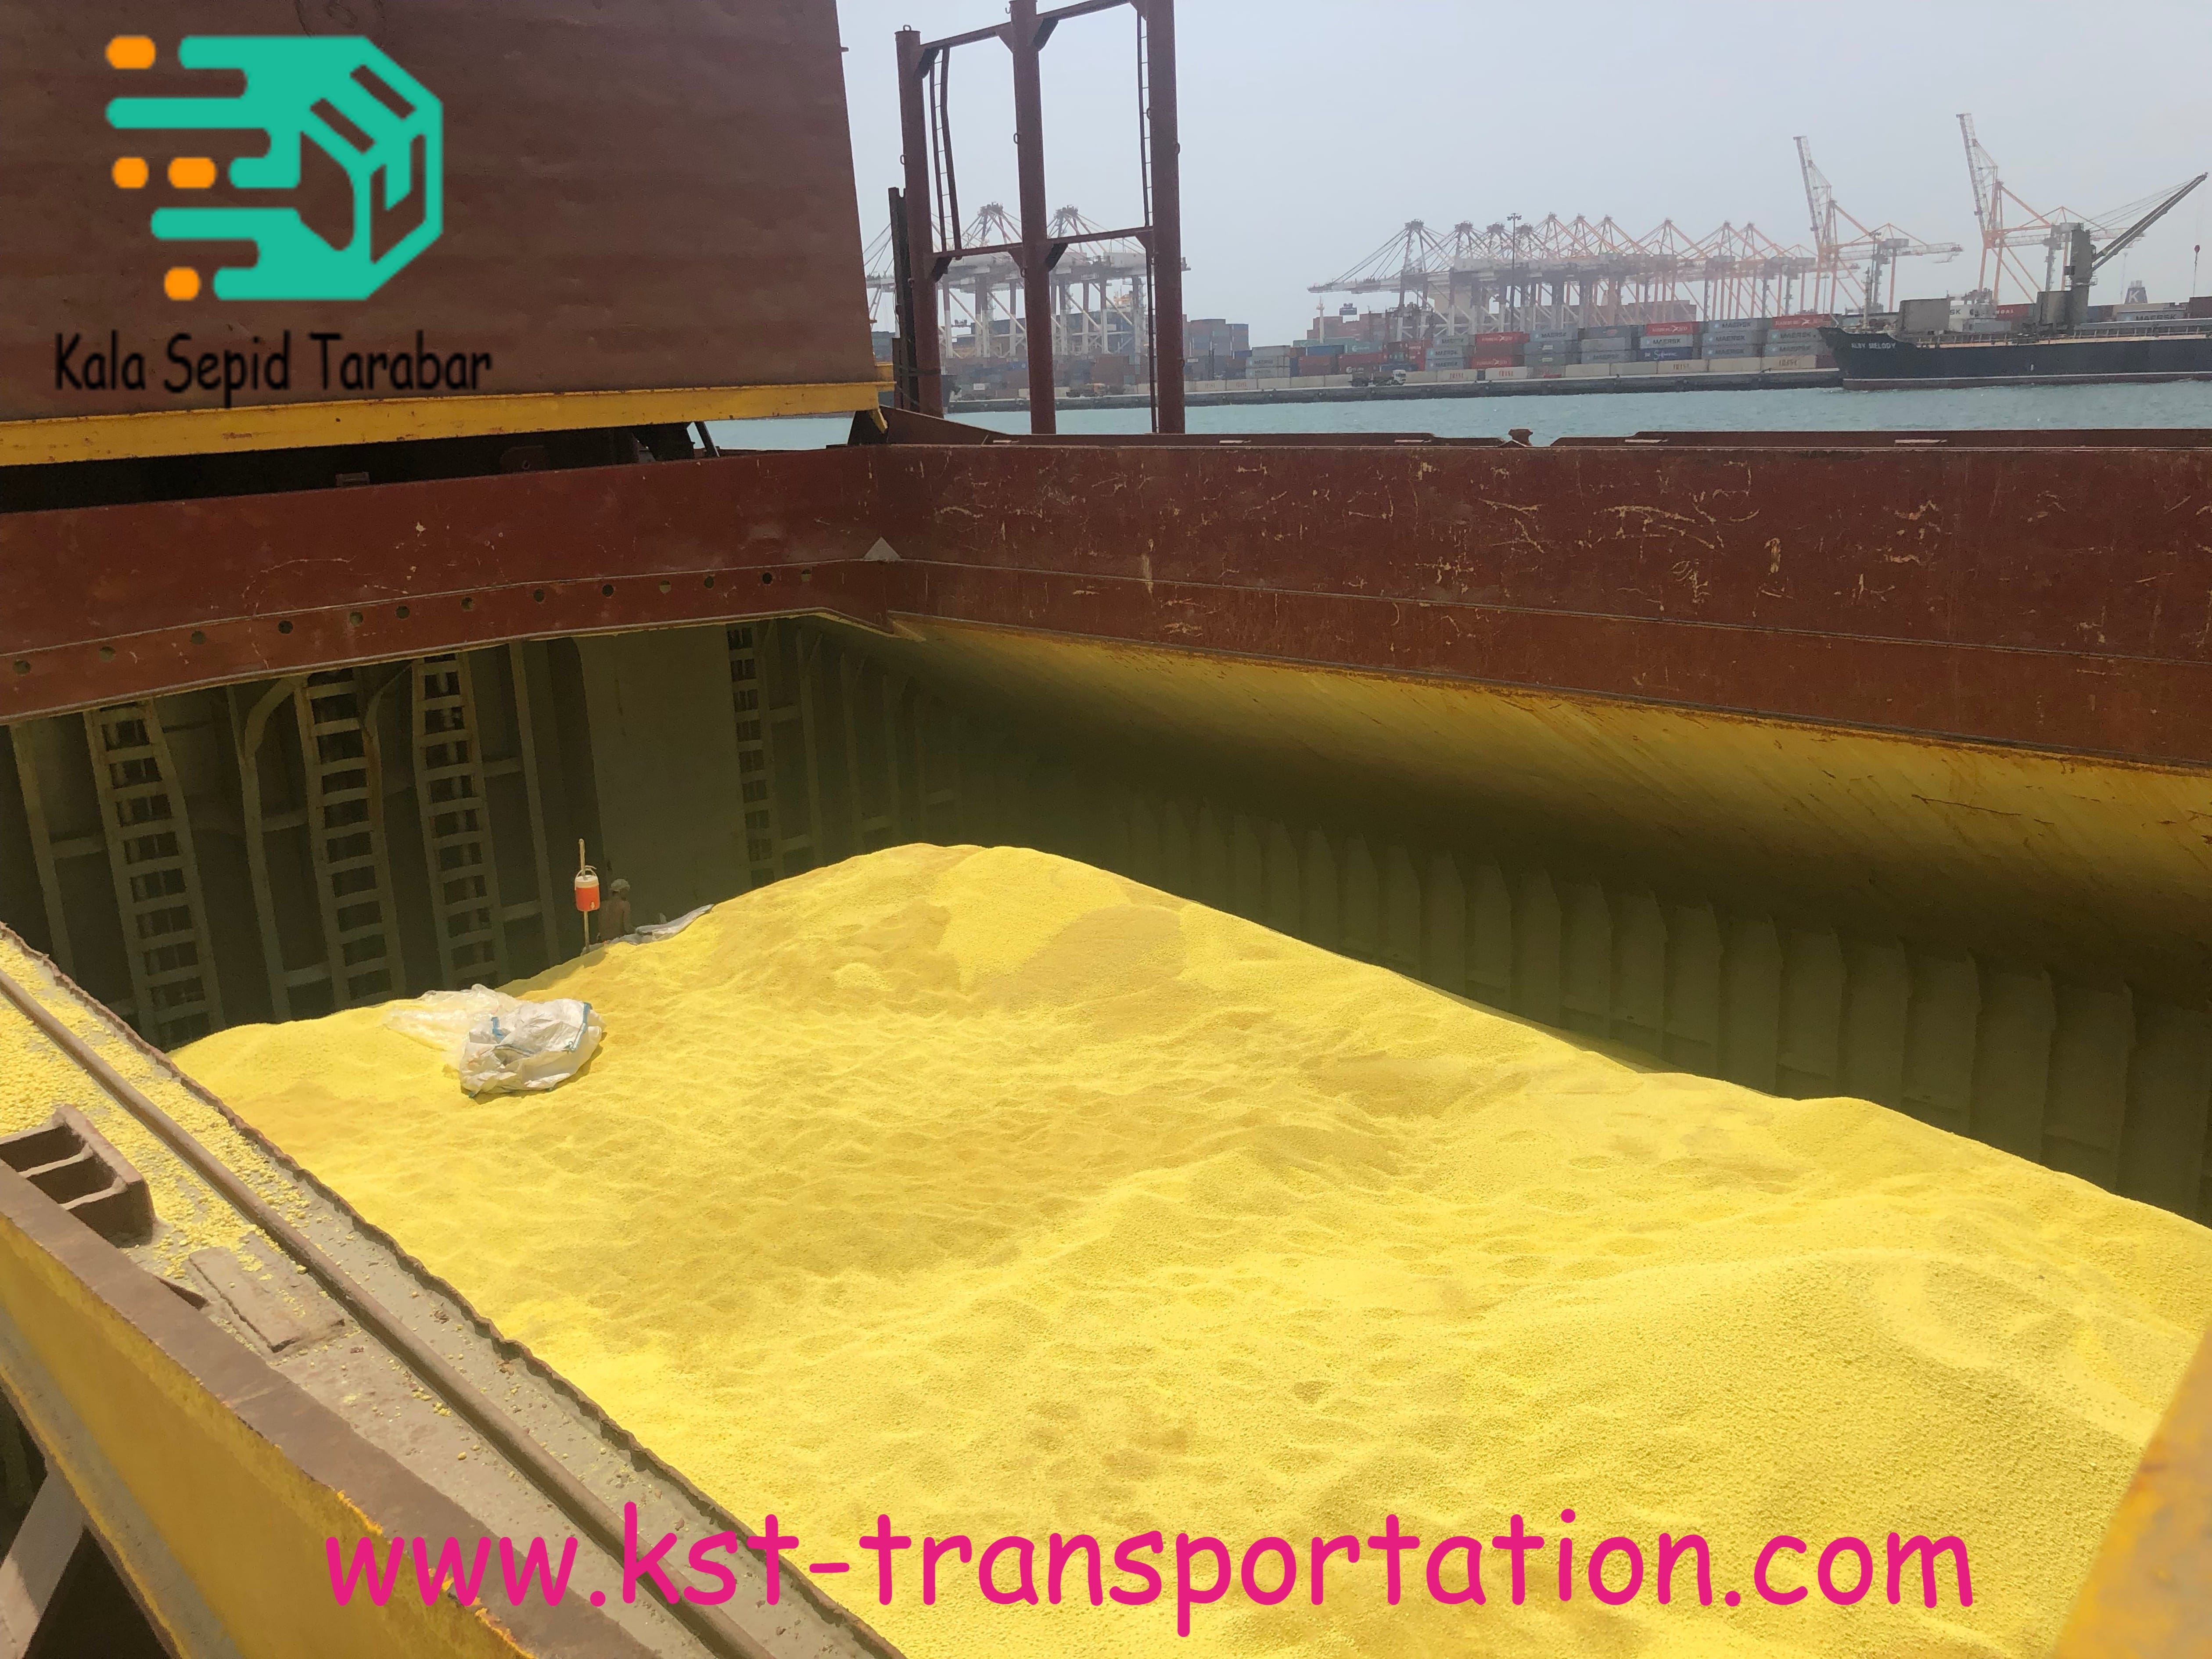 International Transport Company, Sulfur, Sulphur, Sulfur mine, Sulphur mine, Sulfur supplier